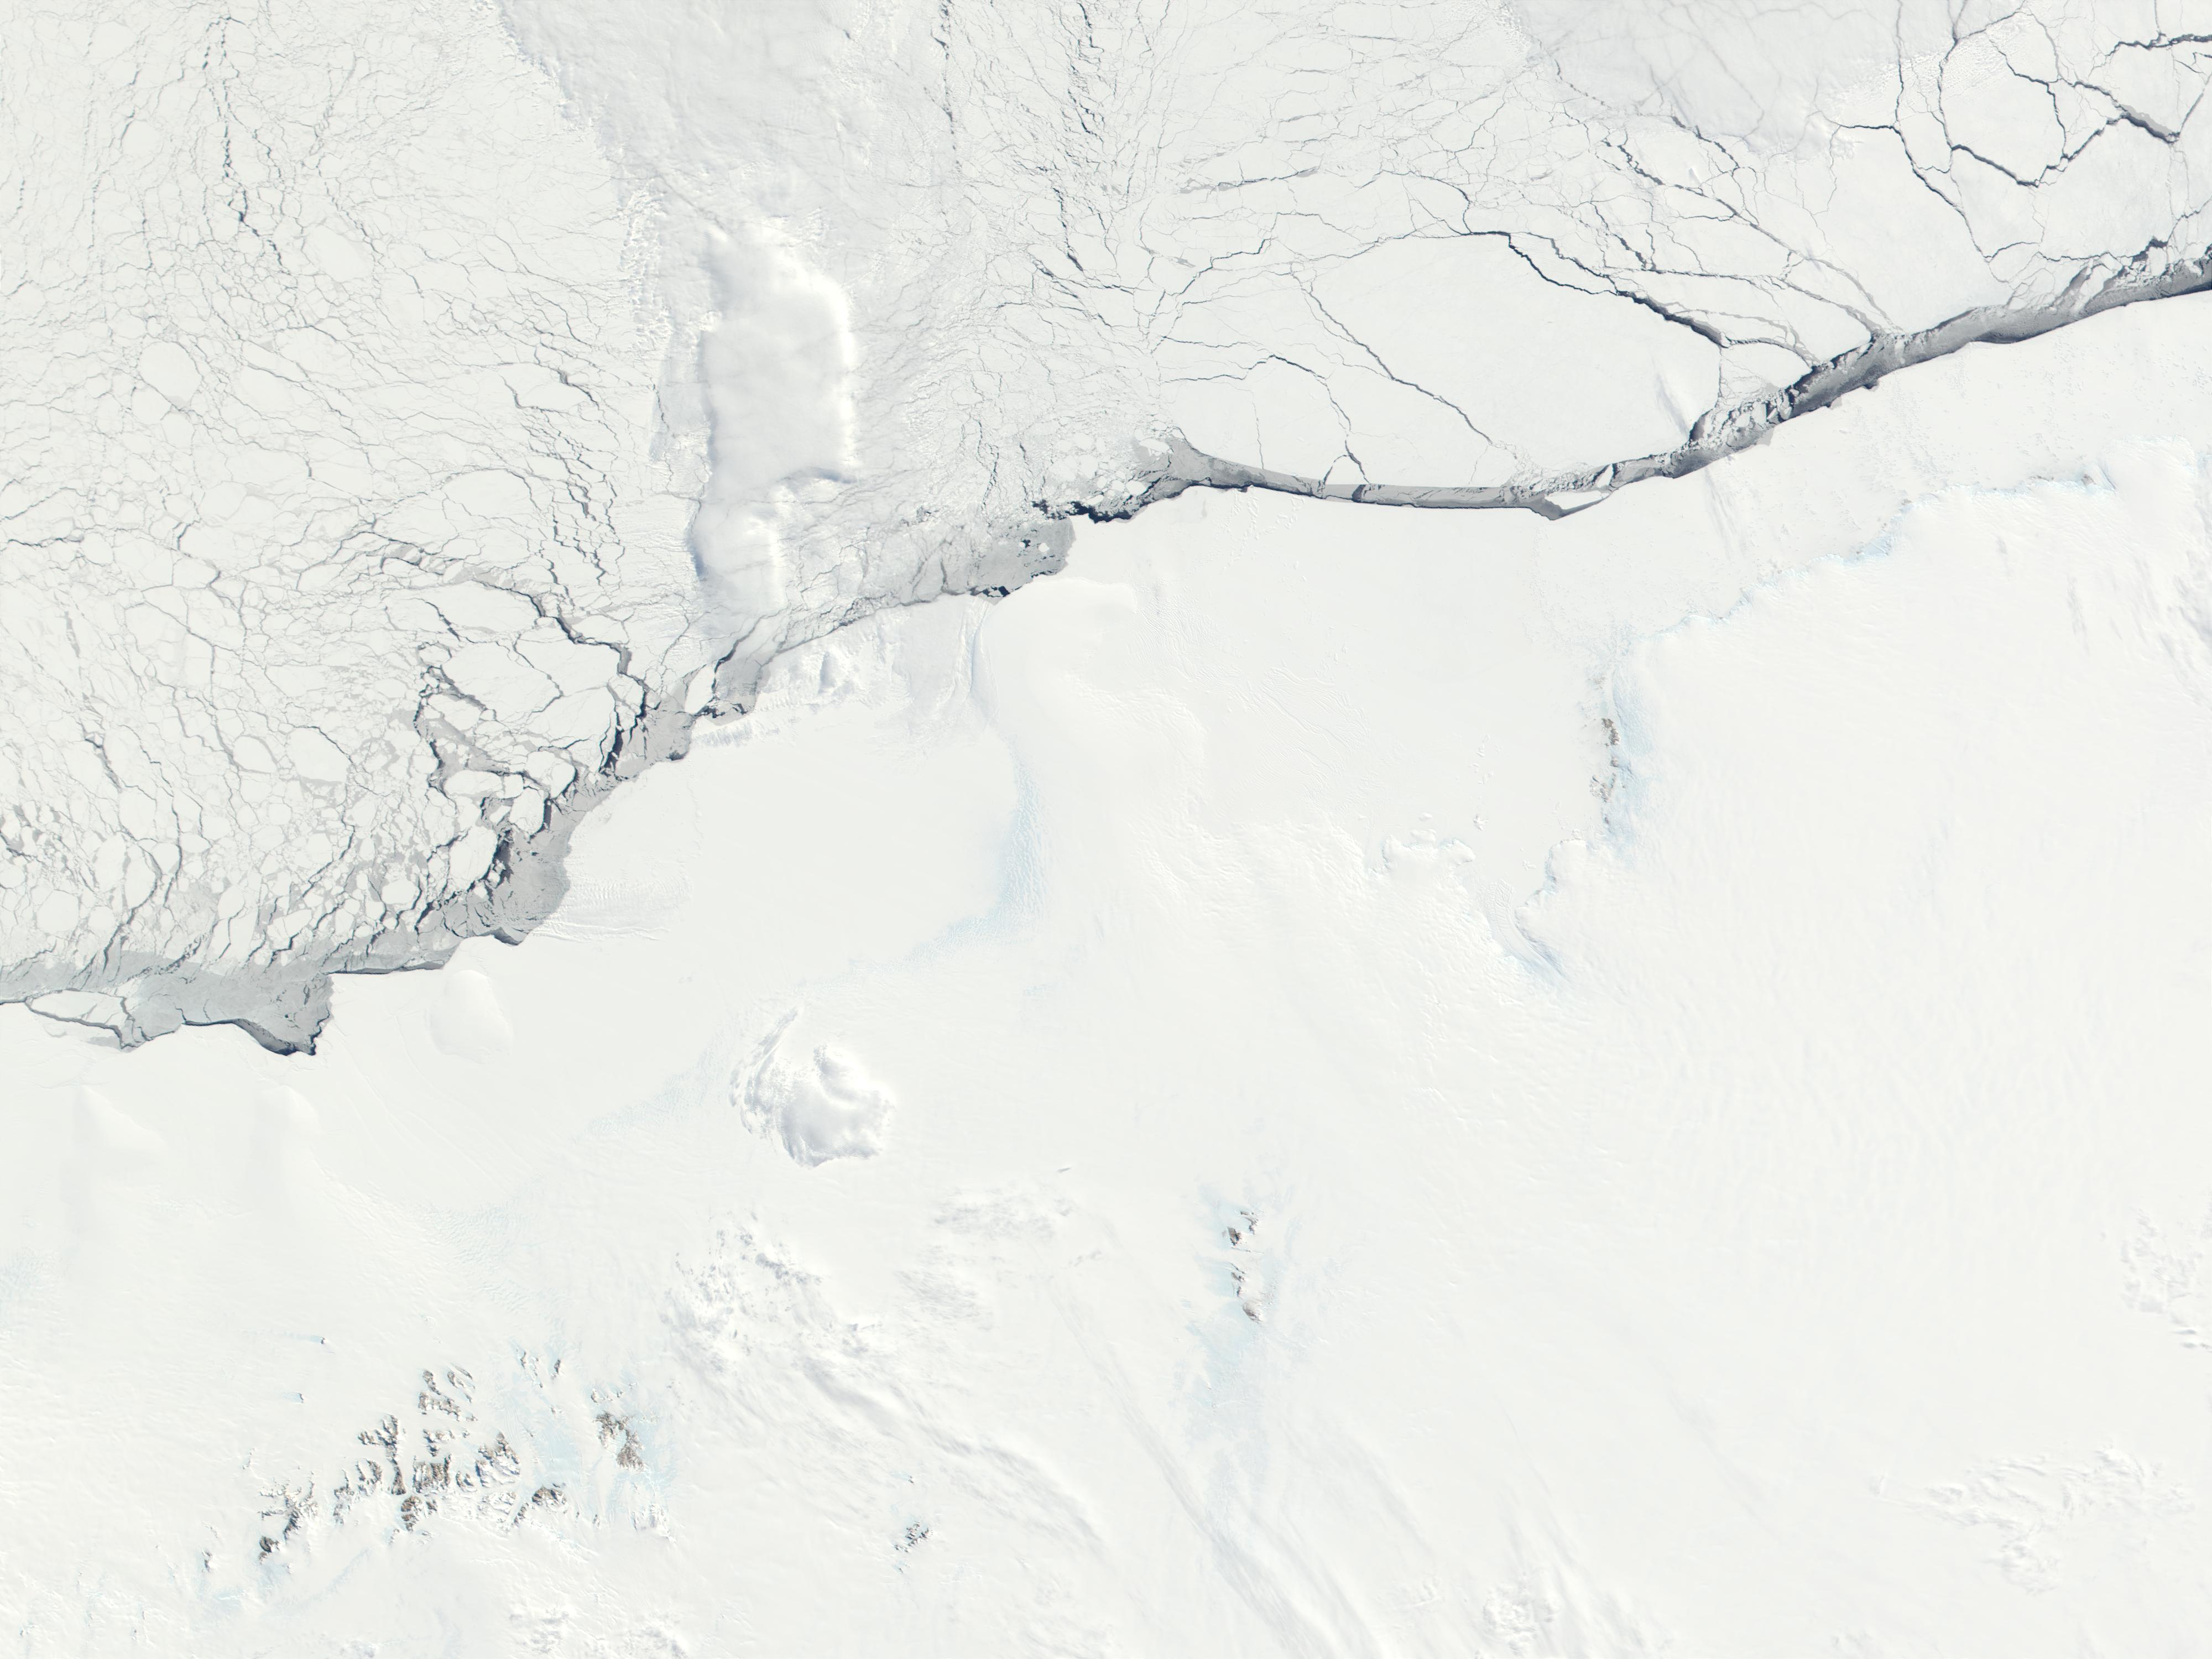 Princess Ragnhild Coast, Prince Harald Coast, and PrinceOlav Coast, Antarctica - related image preview